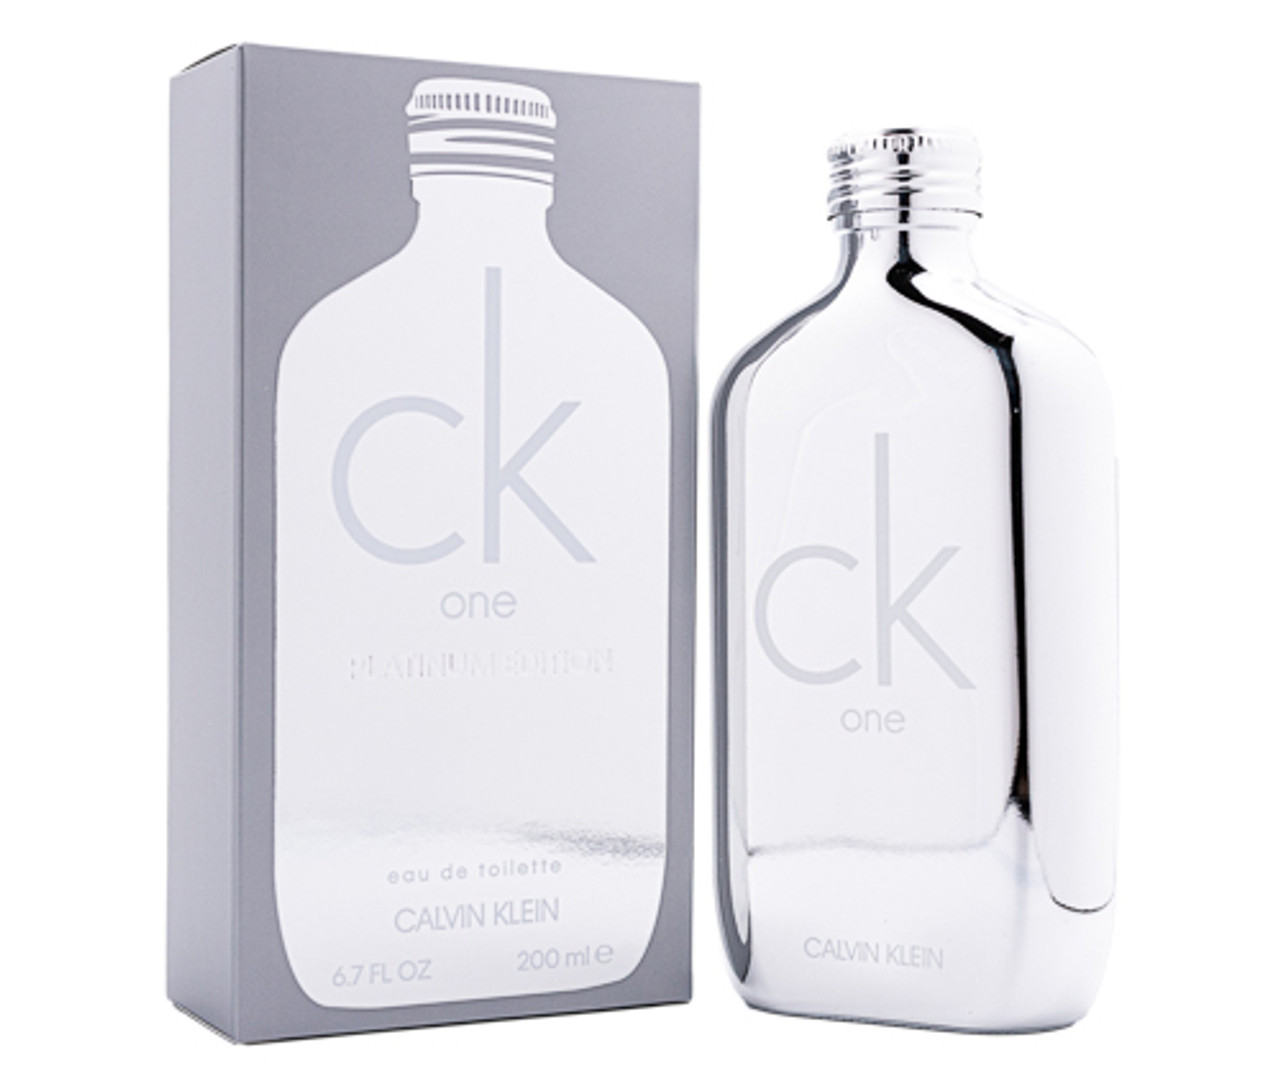 Ck One Platinum Edition by Calvin Klein  oz EDT for Unisex - ForeverLux